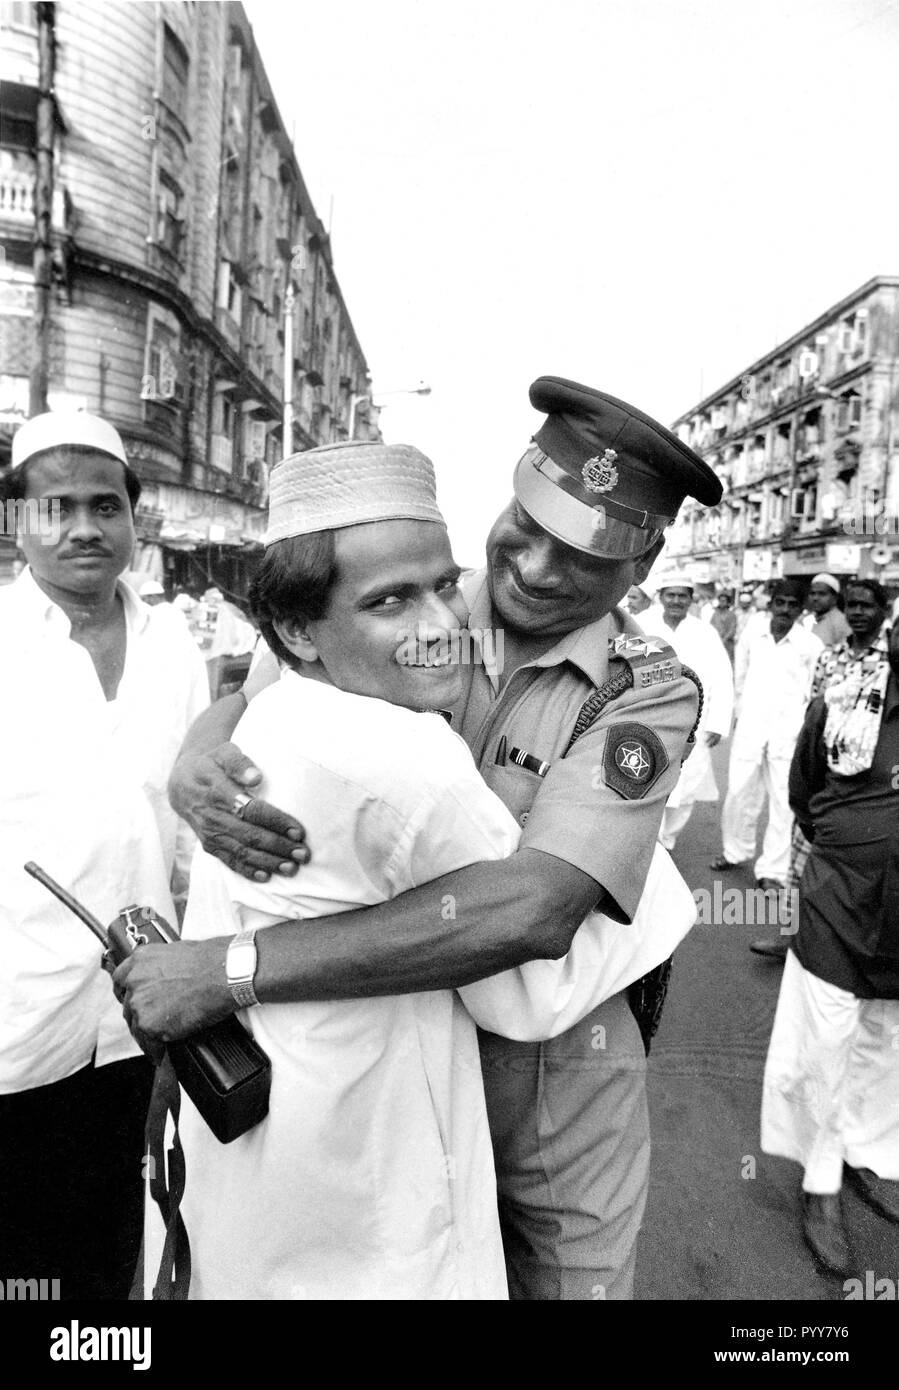 Polizeioffizier Hug muslimischen Mann, Mumbai, Maharashtra, Indien, Asien, 1900 s Stockfoto